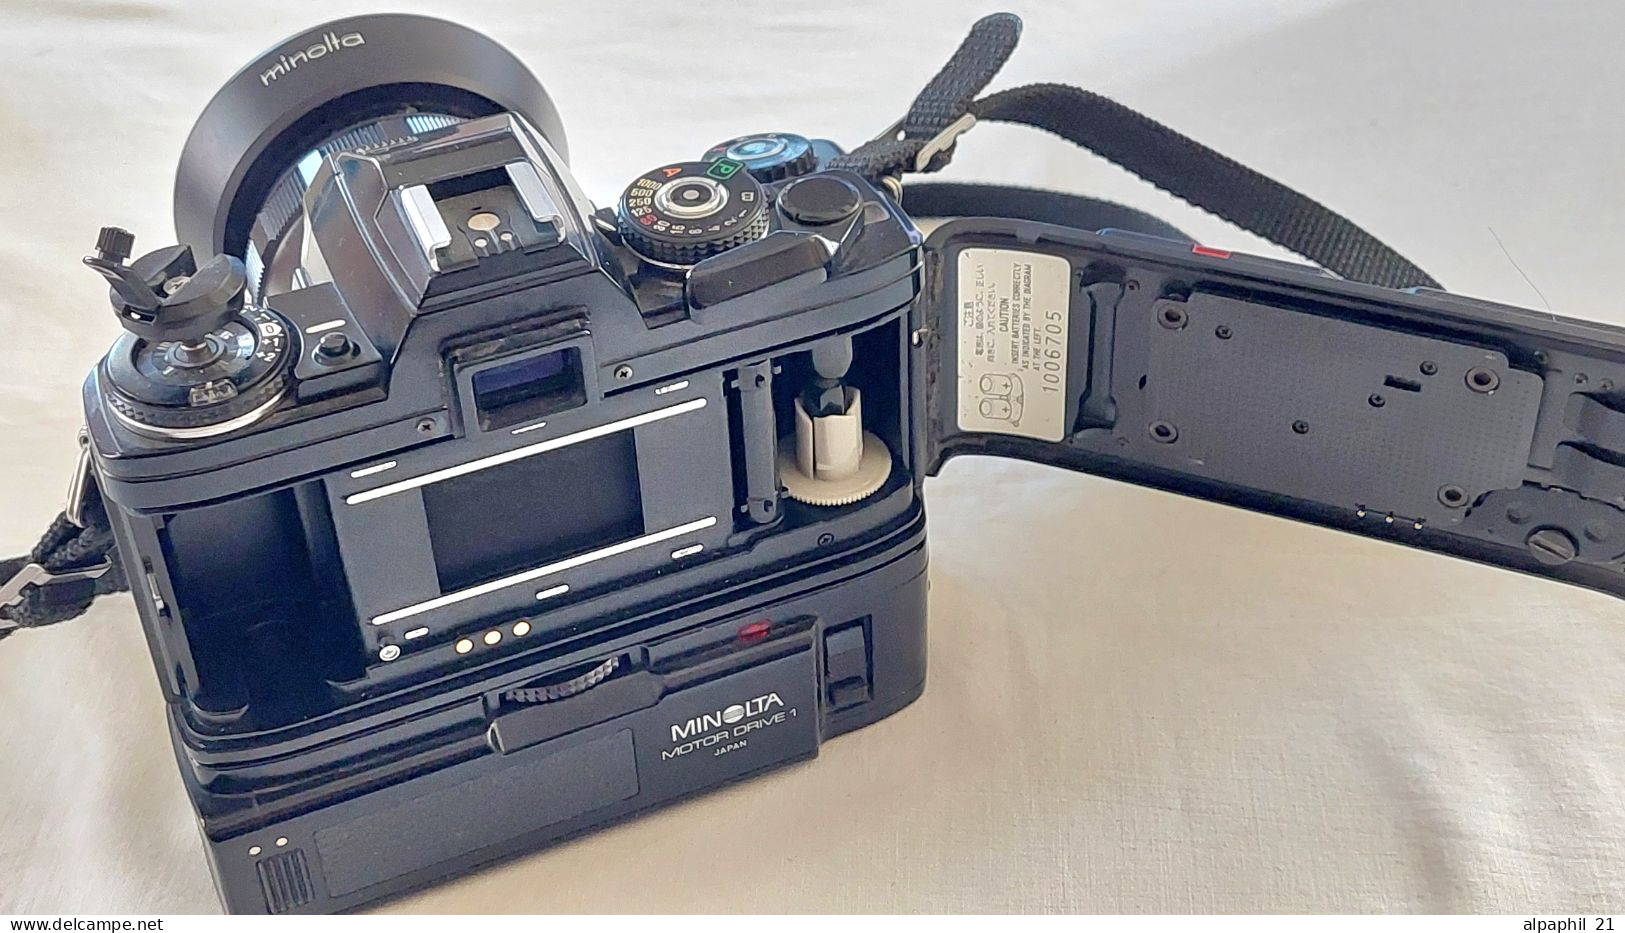 Minolta X-700 MPS With Motor Drive 1 And Lenses - Cámaras Fotográficas